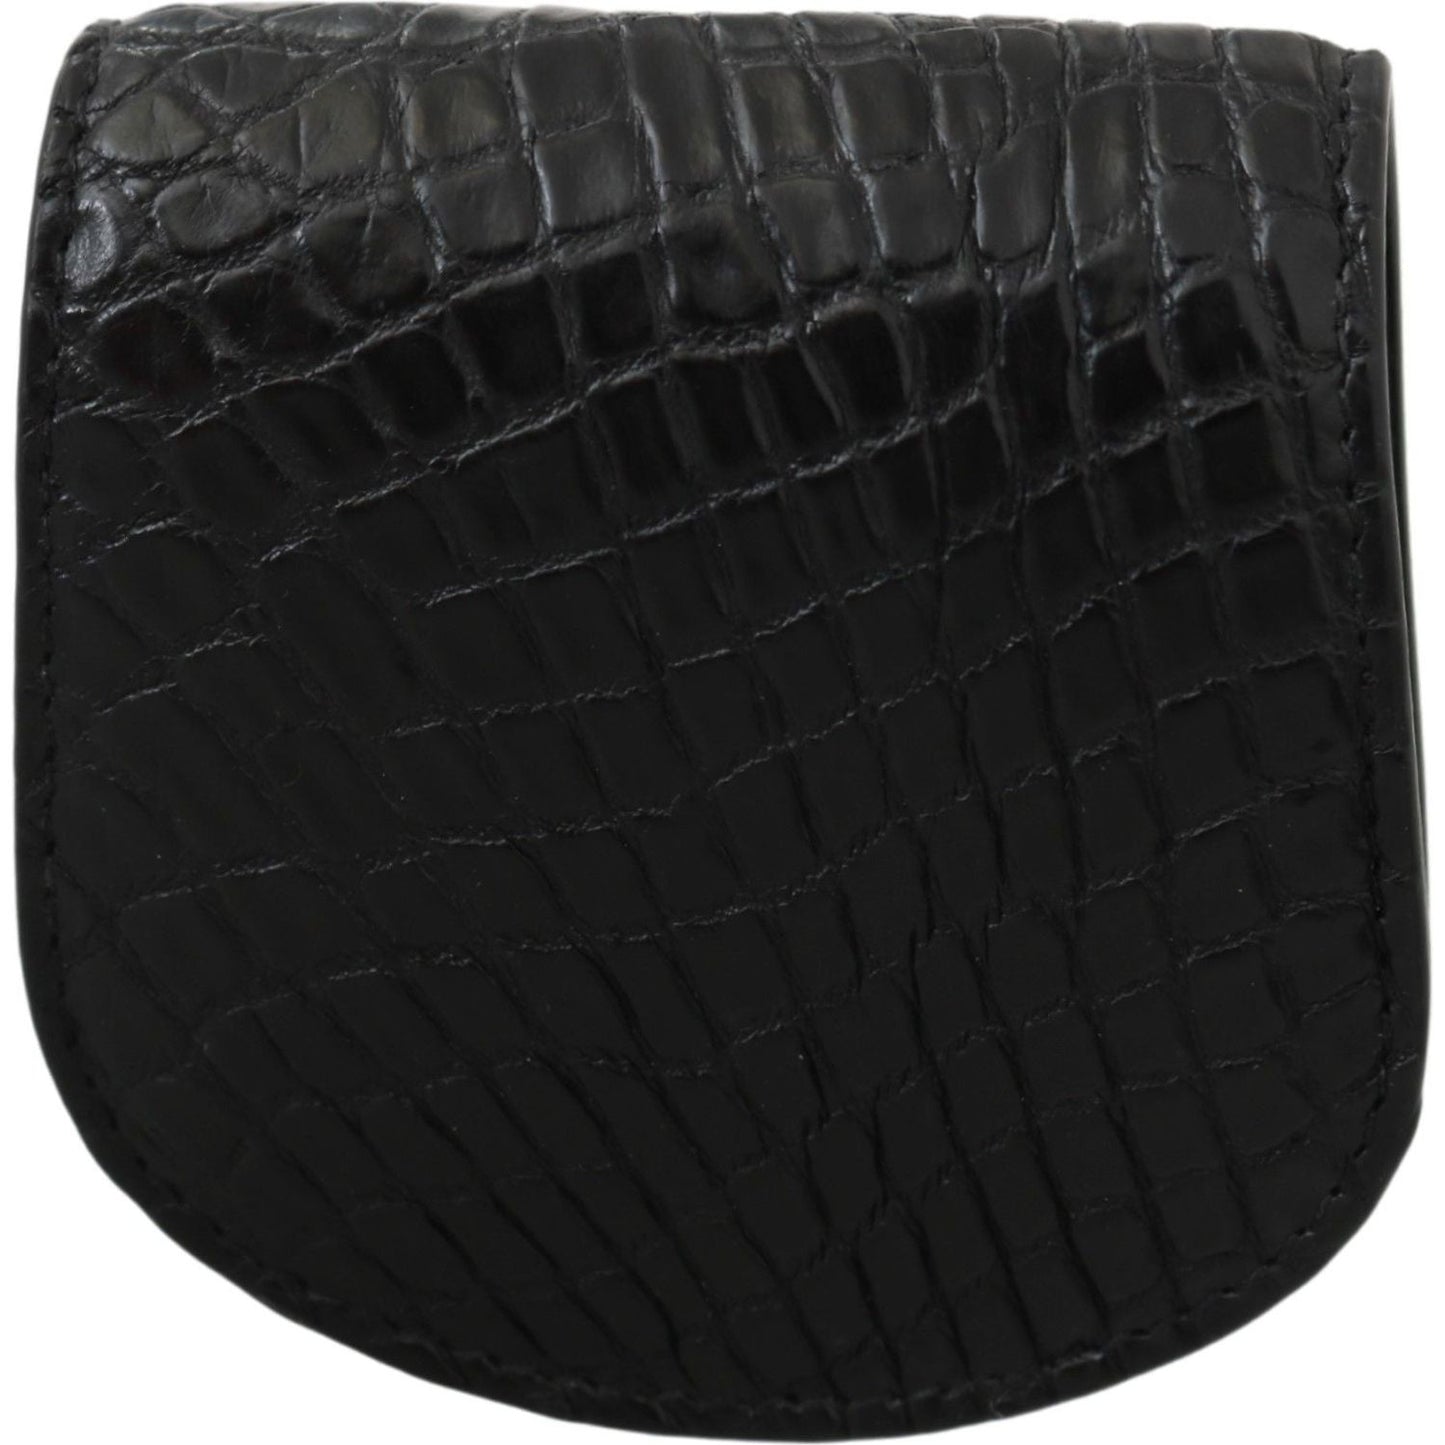 Dolce & Gabbana Sleek Black Leather Coin Case Wallet black-exotic-skin-pocket-condom-case-holder Condom Case IMG_0231-c9437a12-07a.jpg